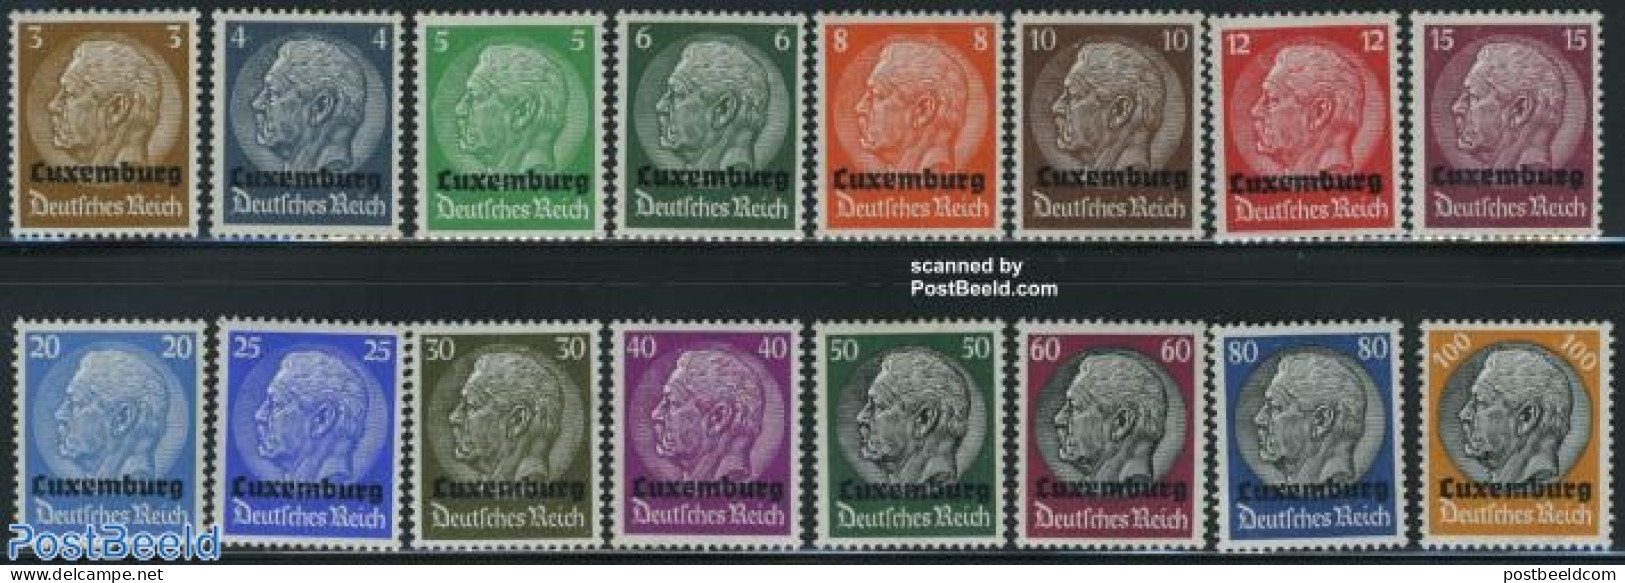 Luxemburg 1940 German Occupation, Overprints On German Stamps 16v, Mint NH, History - German Occupations - Unused Stamps